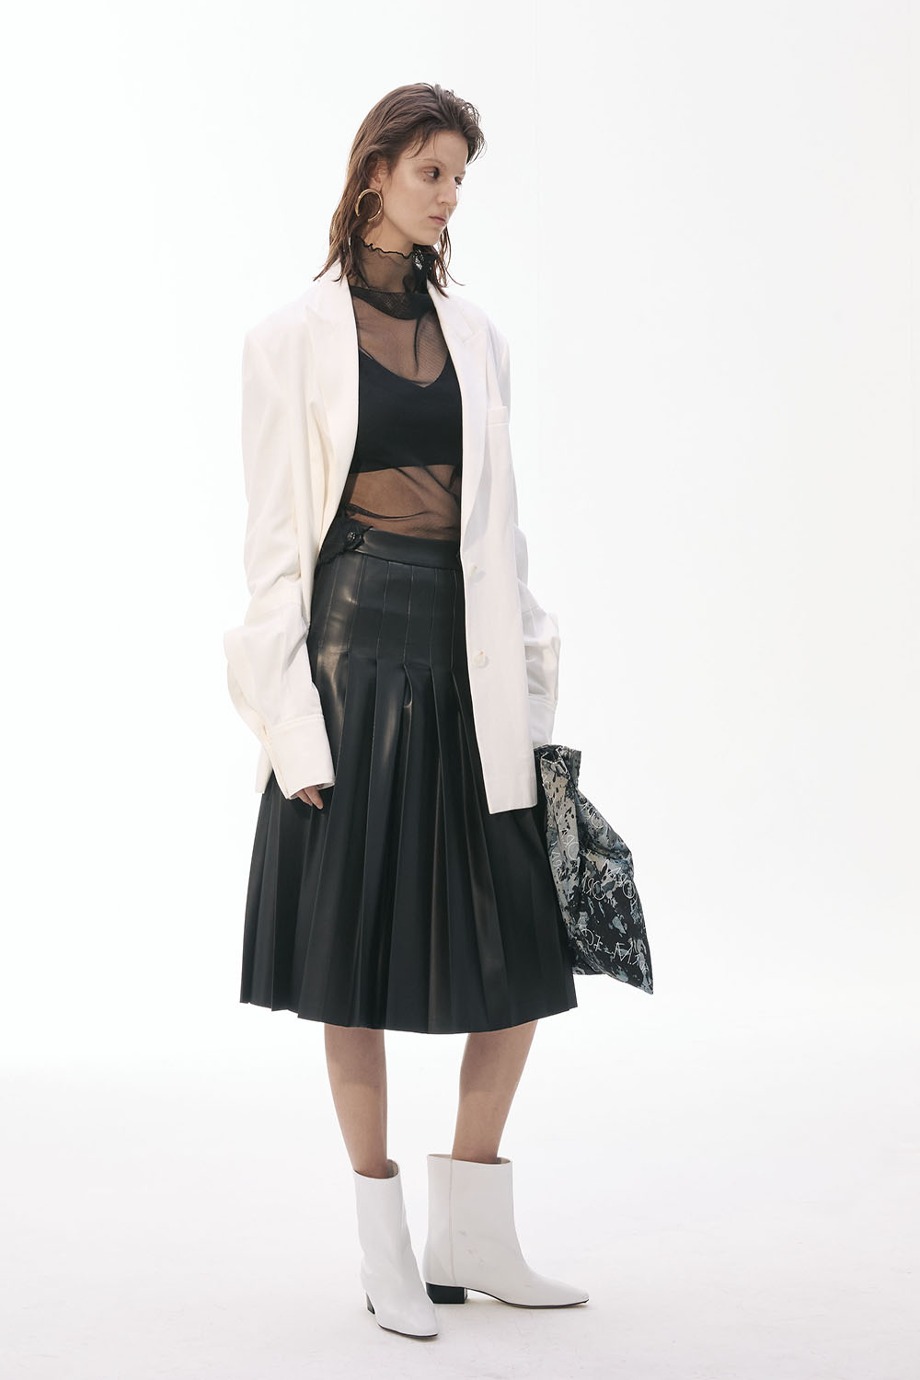 Leather Pleats Skirt